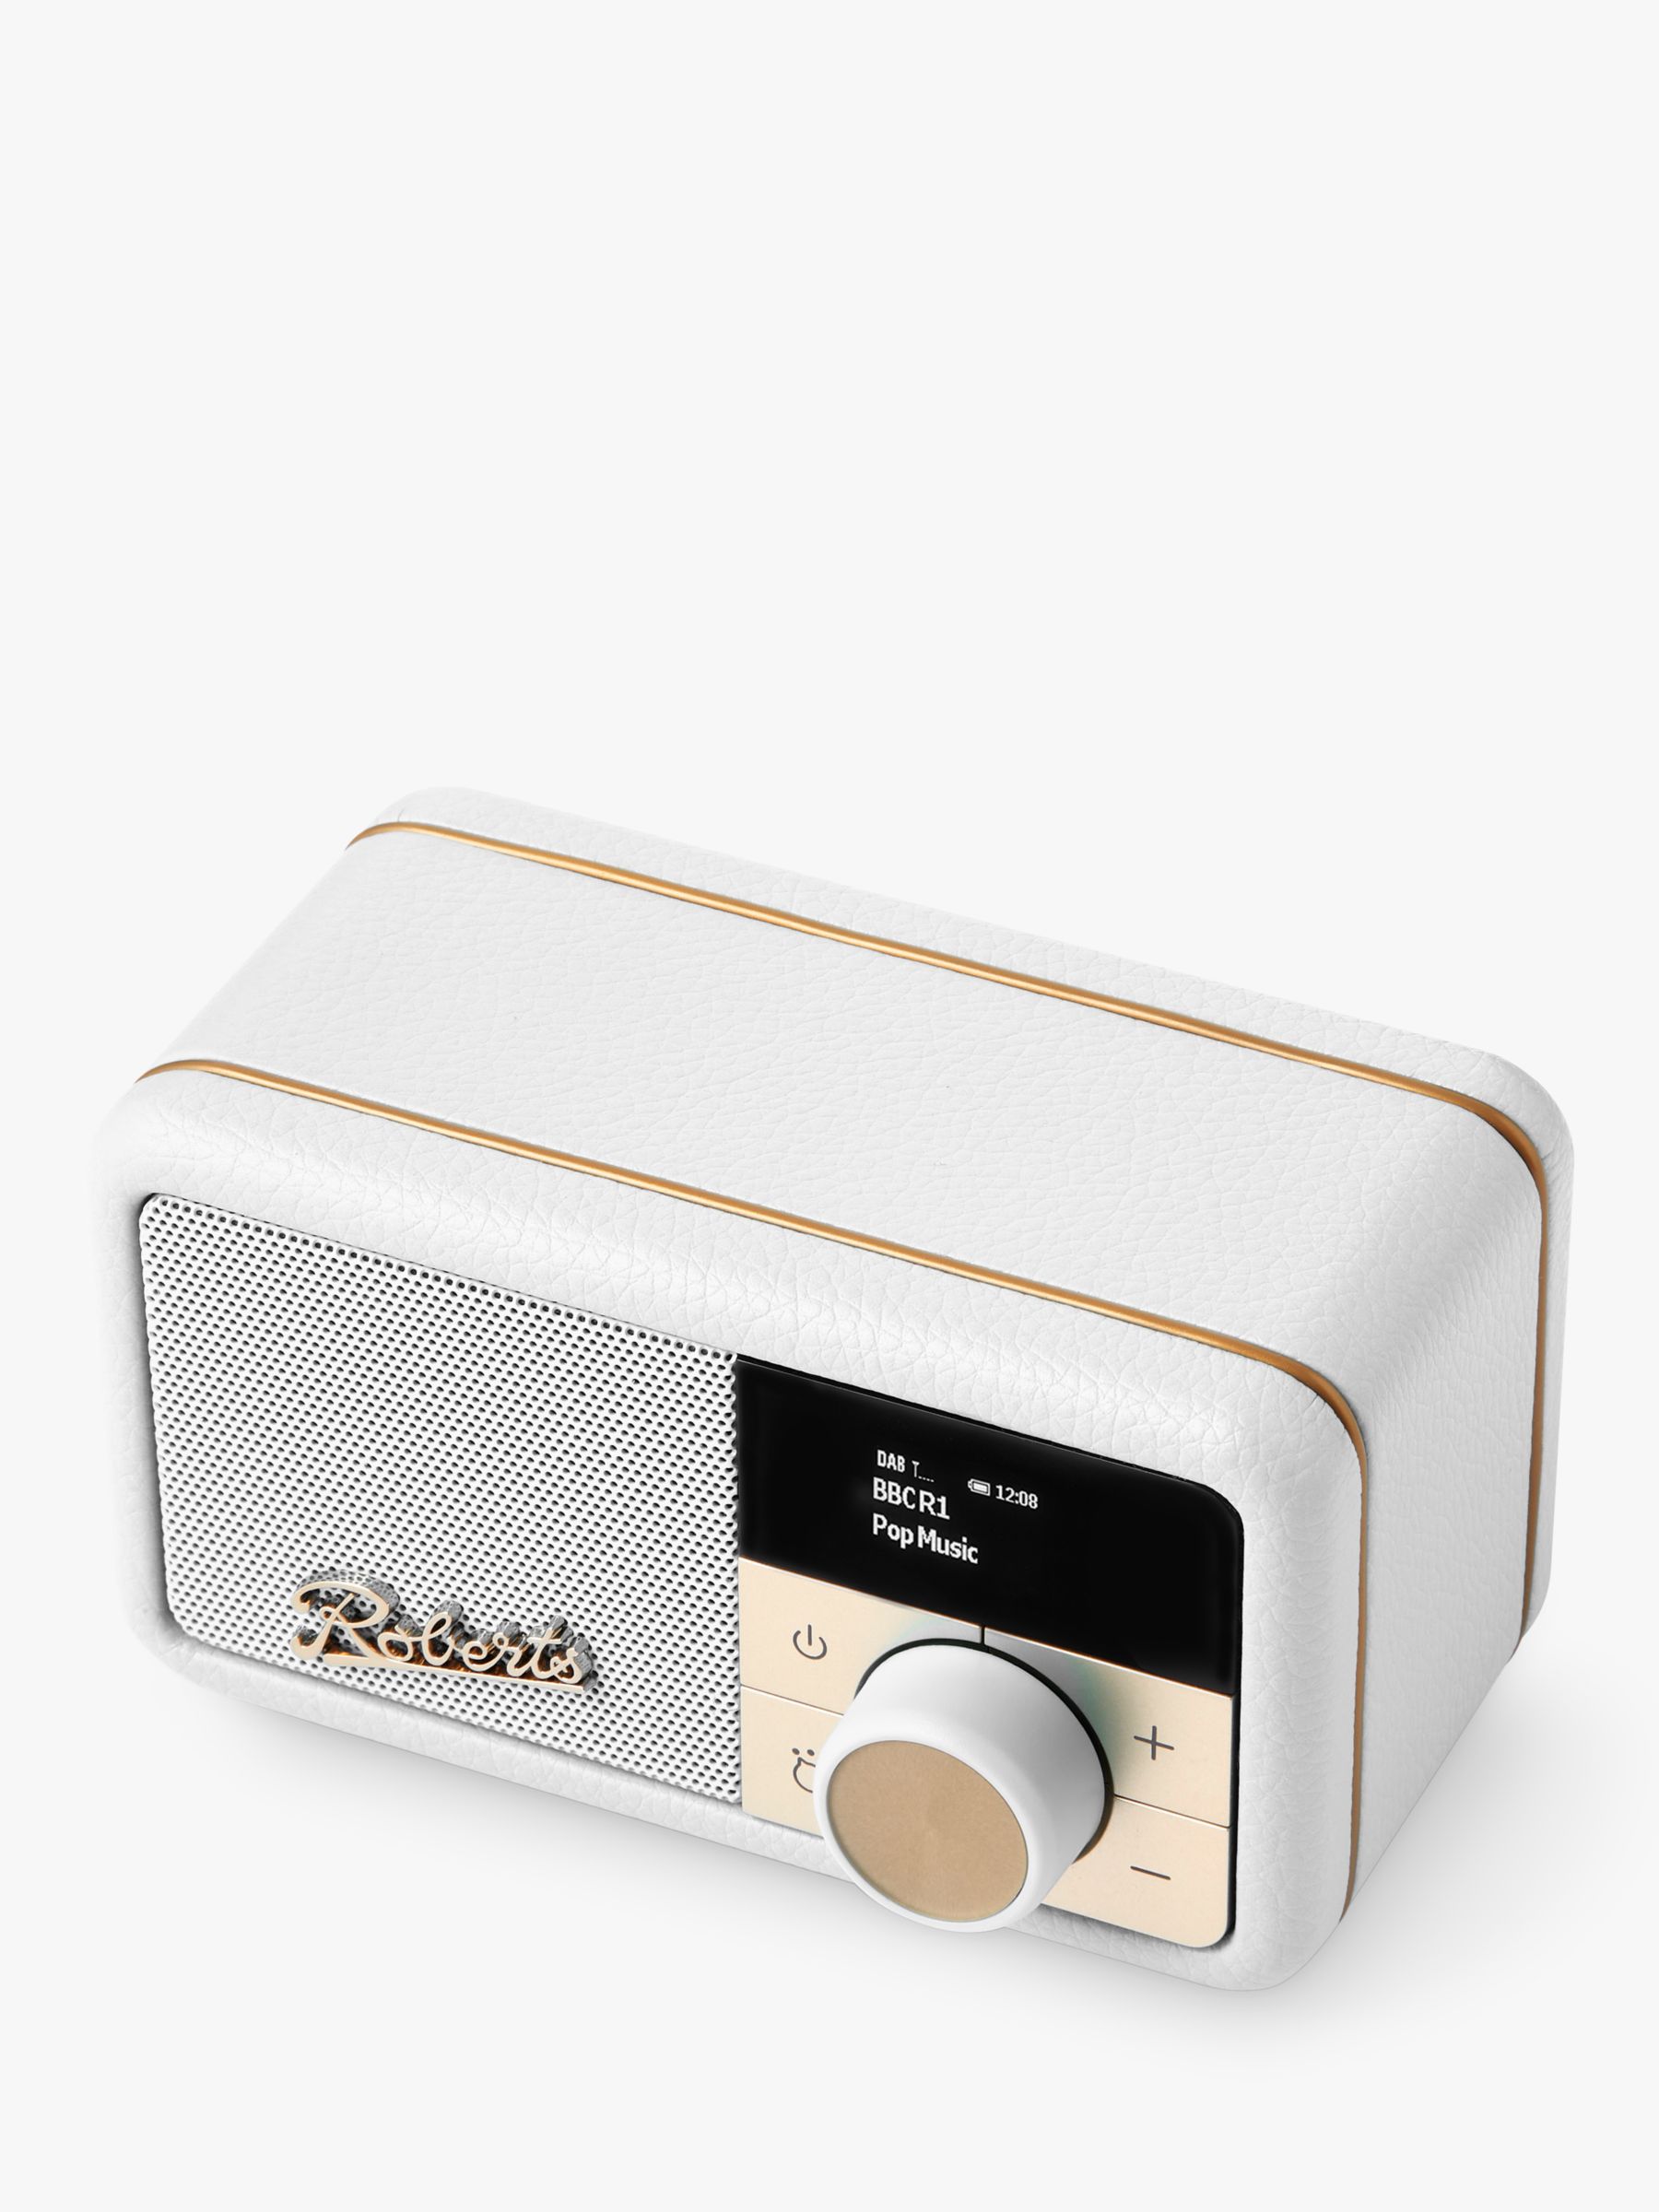 Roberts Revival Petite DAB/DAB+/FM Bluetooth Portable Digital Radio, Pop  Orange